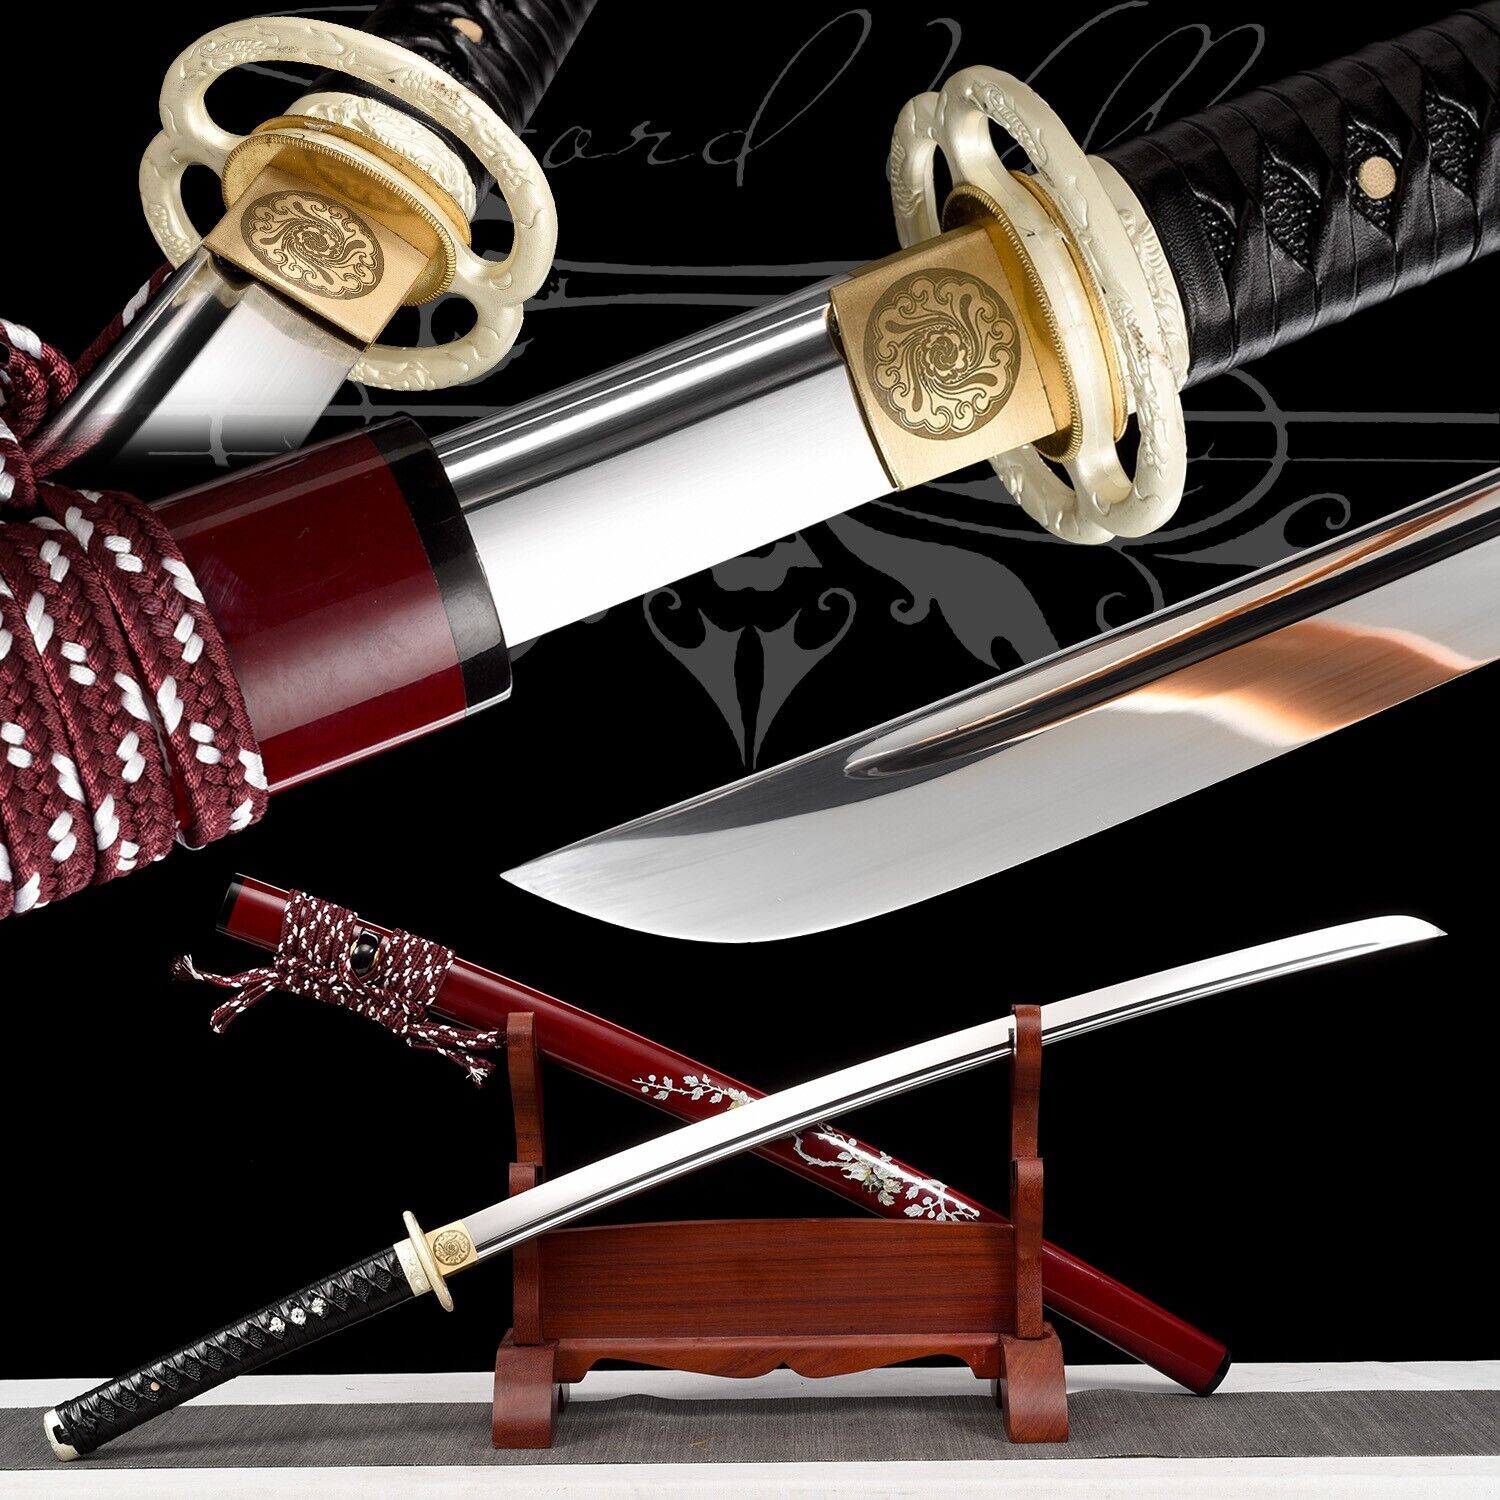 Handmade Katana/High Manganese Steel/Samurai Sword/Sharpen/Real/Collectible